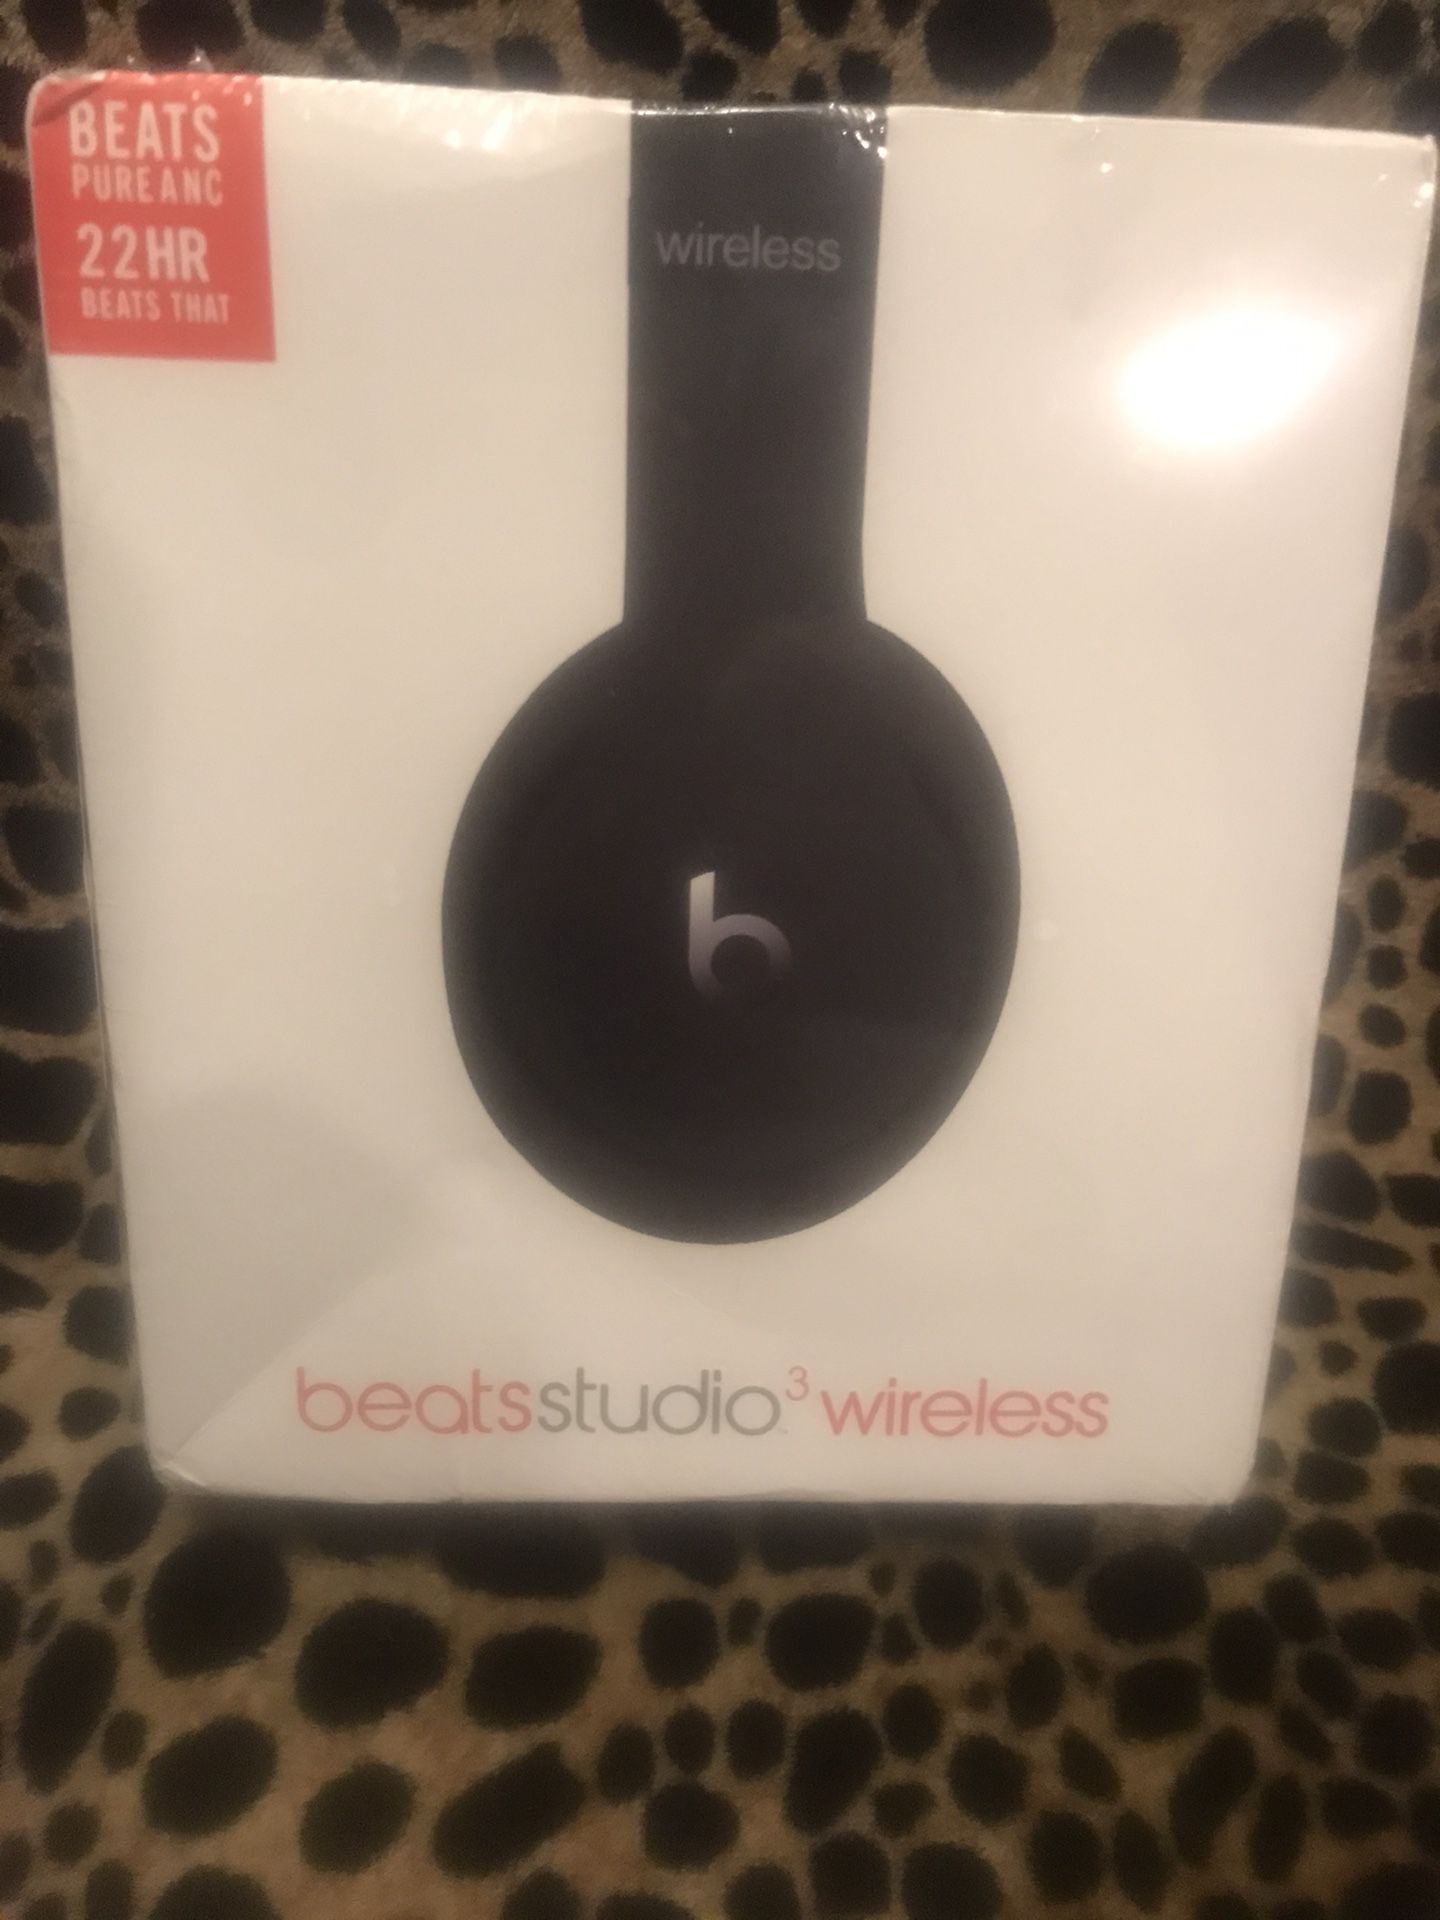 Beats Studio 3 wireless unused